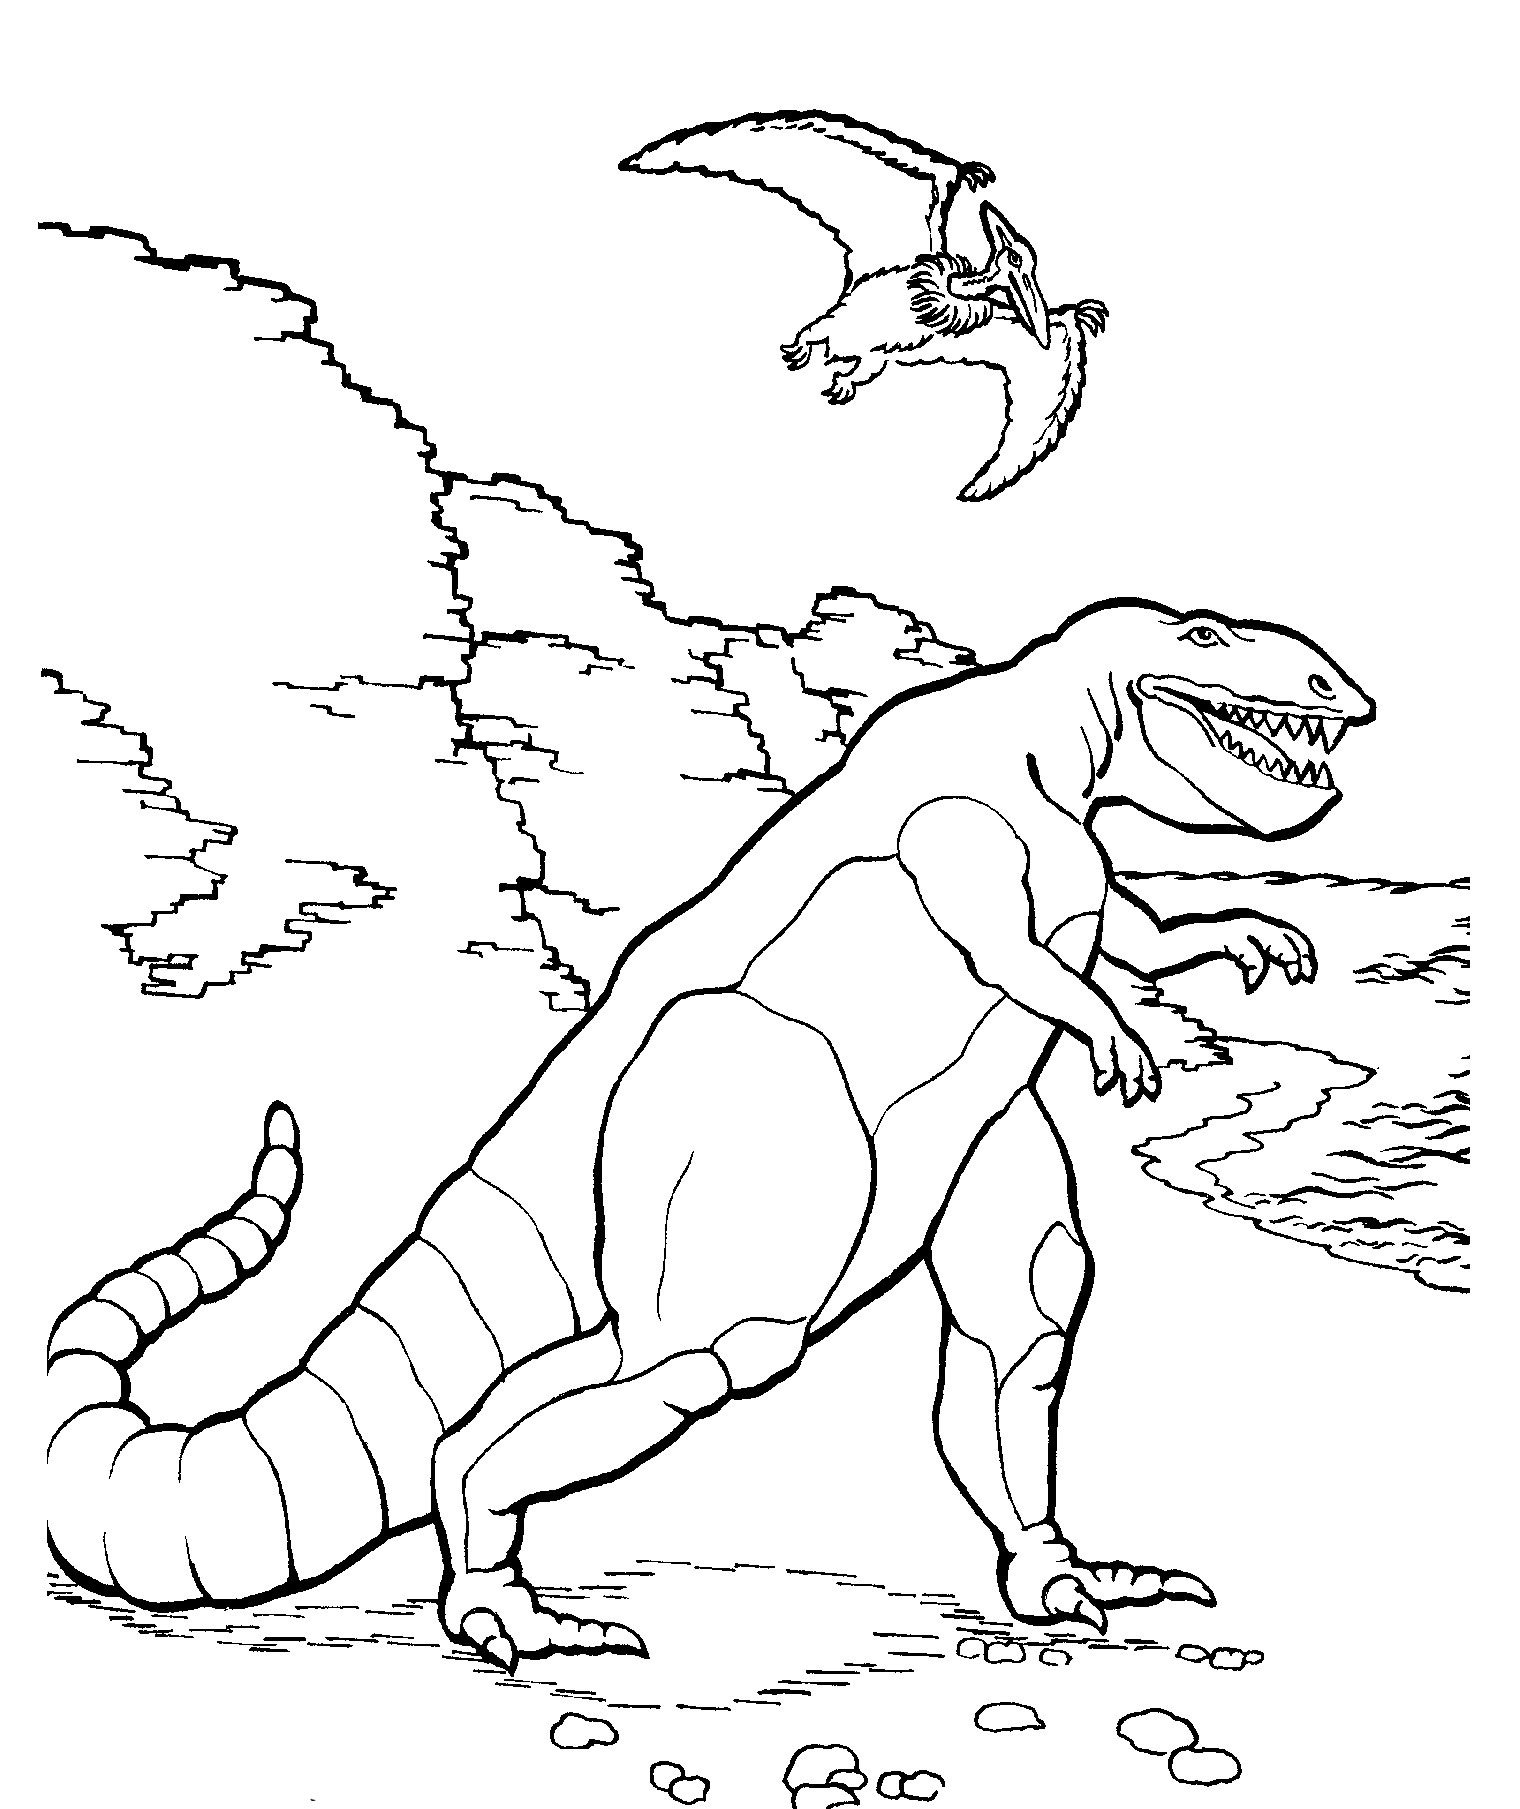 Раскраски динозавры формат а4. Тарбозавр раскраска динозавра. Раскраски для мальчиков Тарбозавр. Тарбозавр разукрашка. Динозавры / раскраска.